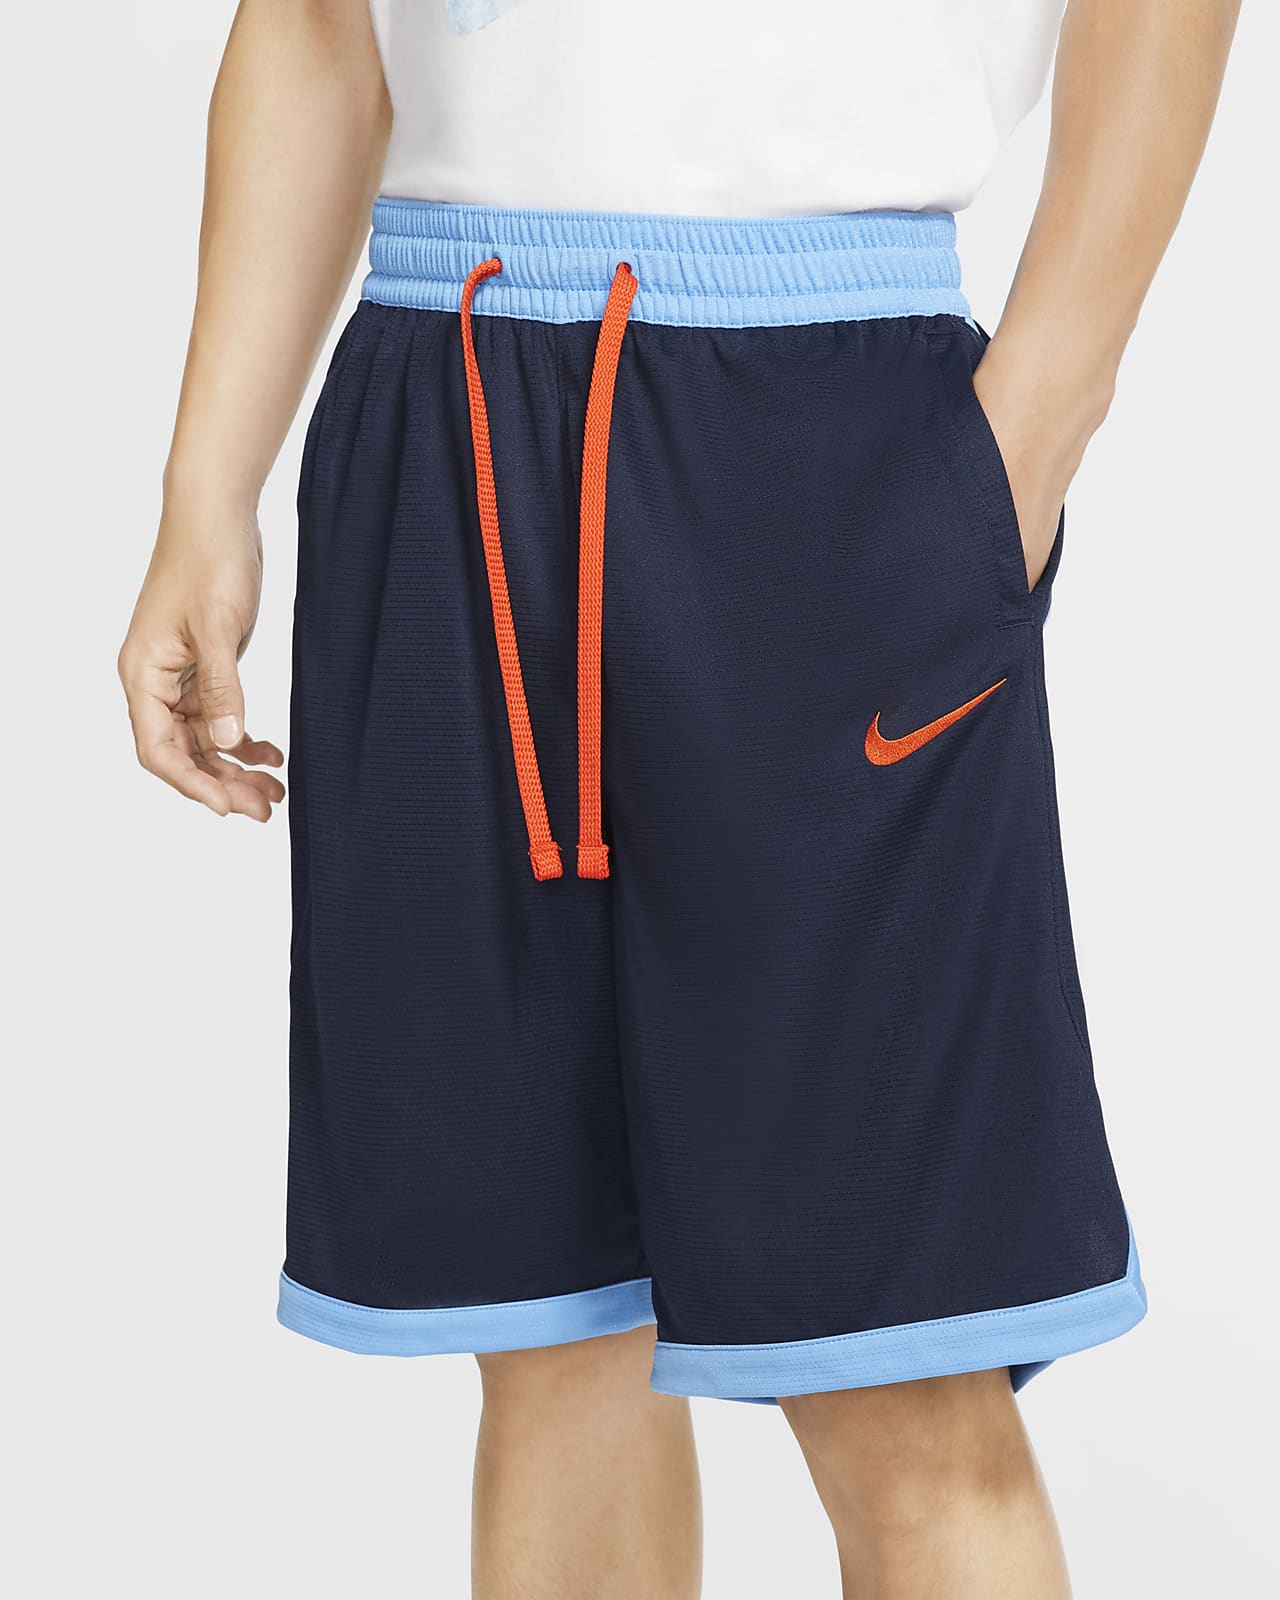 mens nike basketball shorts on sale